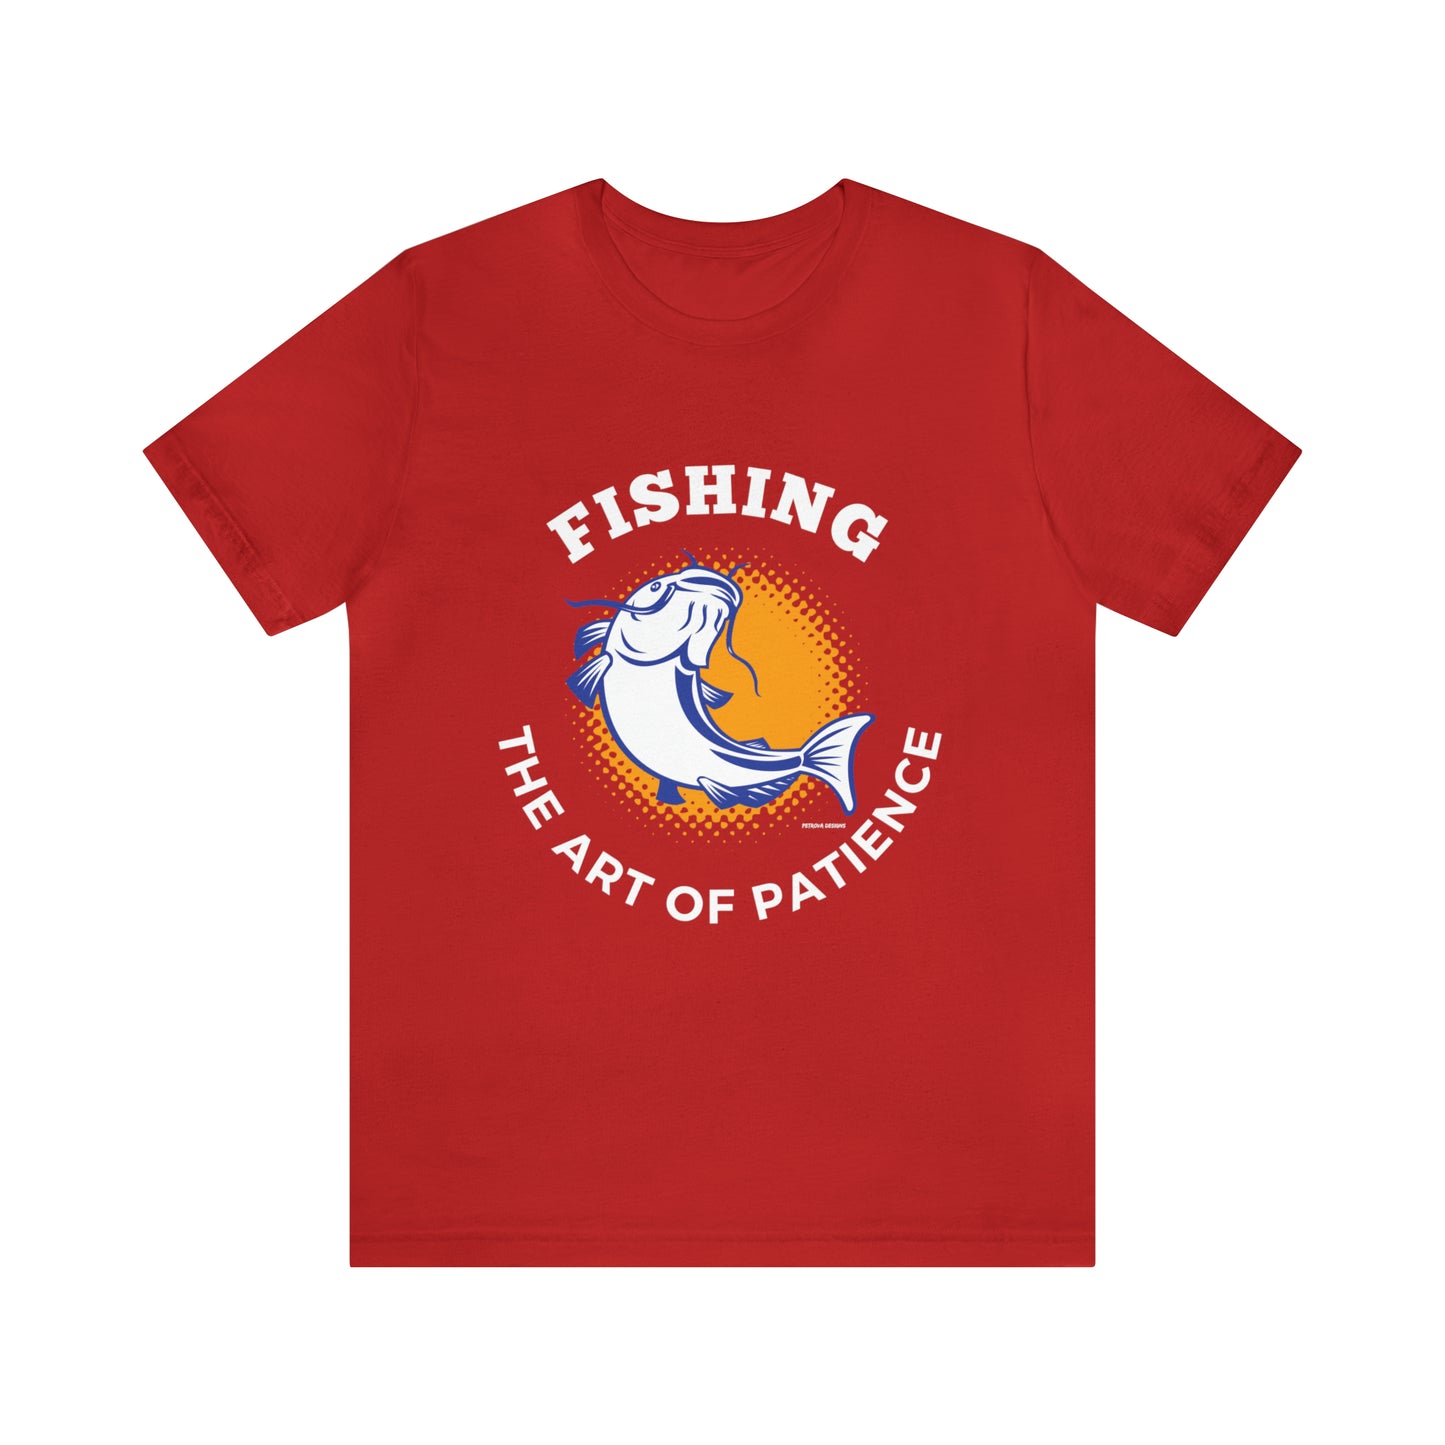 Red T-Shirt Tshirt Design Gift for Friend and Family Short Sleeved Shirt Fishing Hobby Aesthetic Petrova Designs